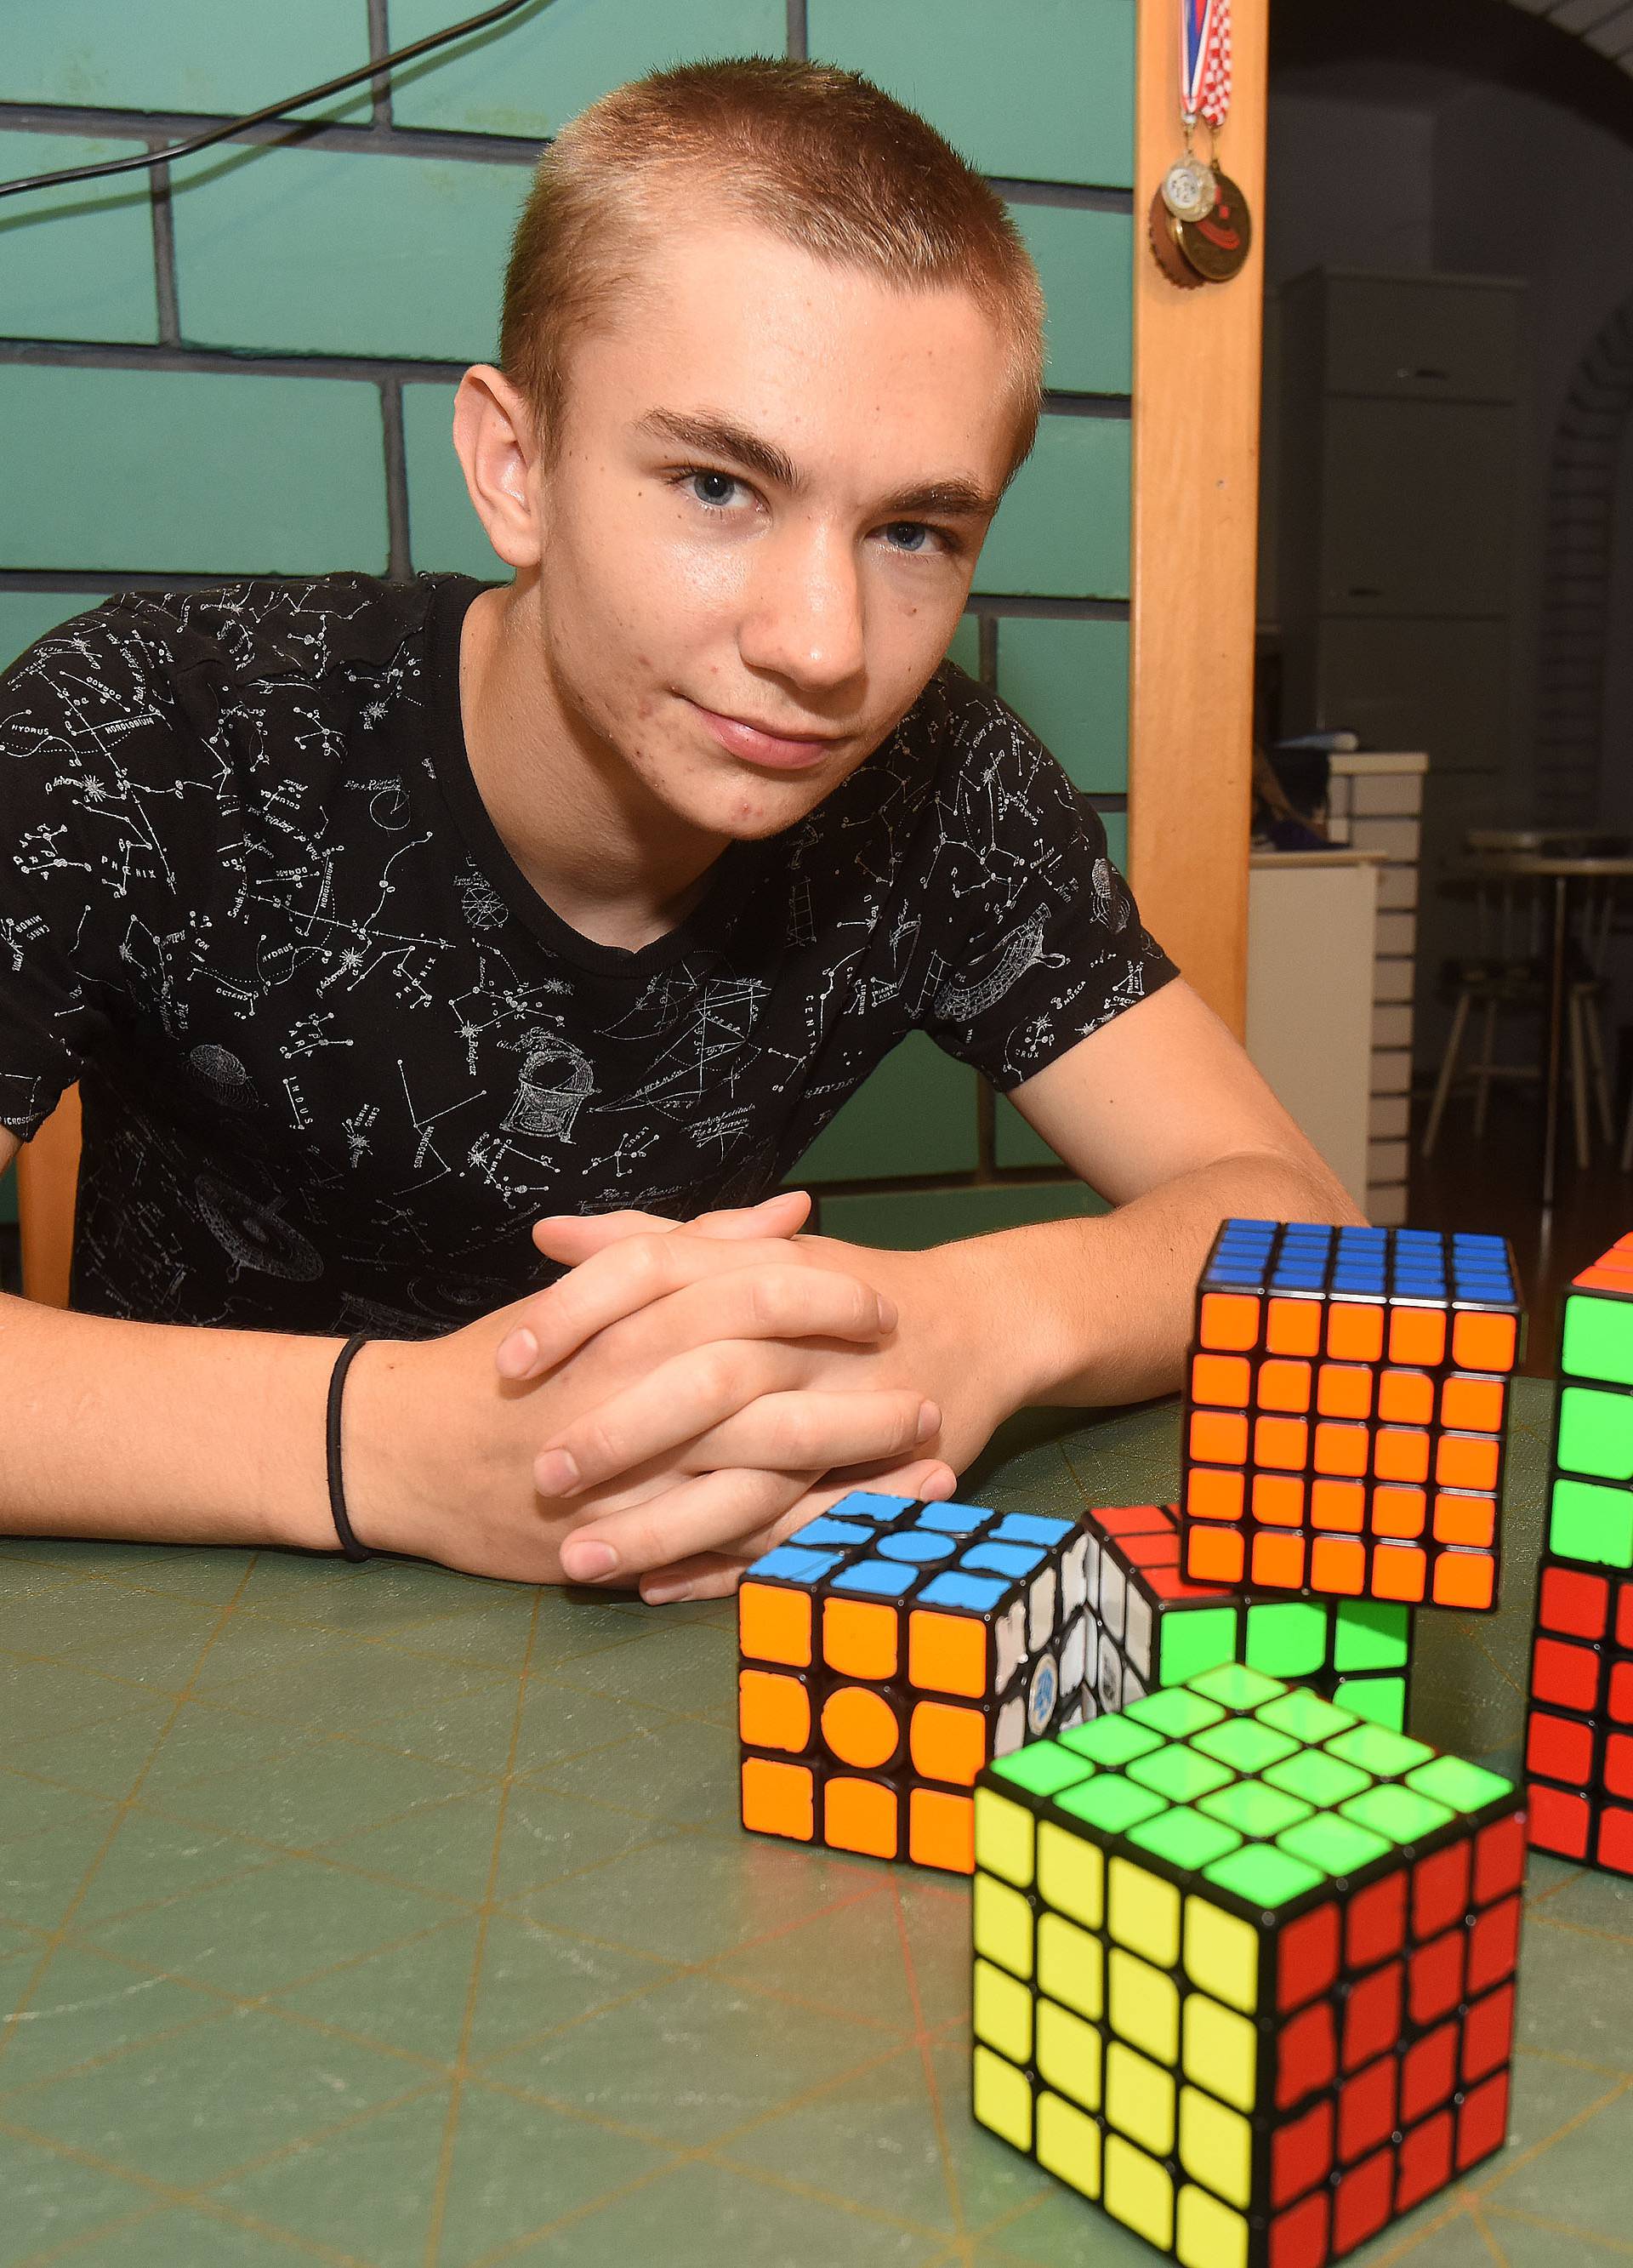 Varaždinski rekorder: Rubikovu kocku složi u samo 8 sekundi!